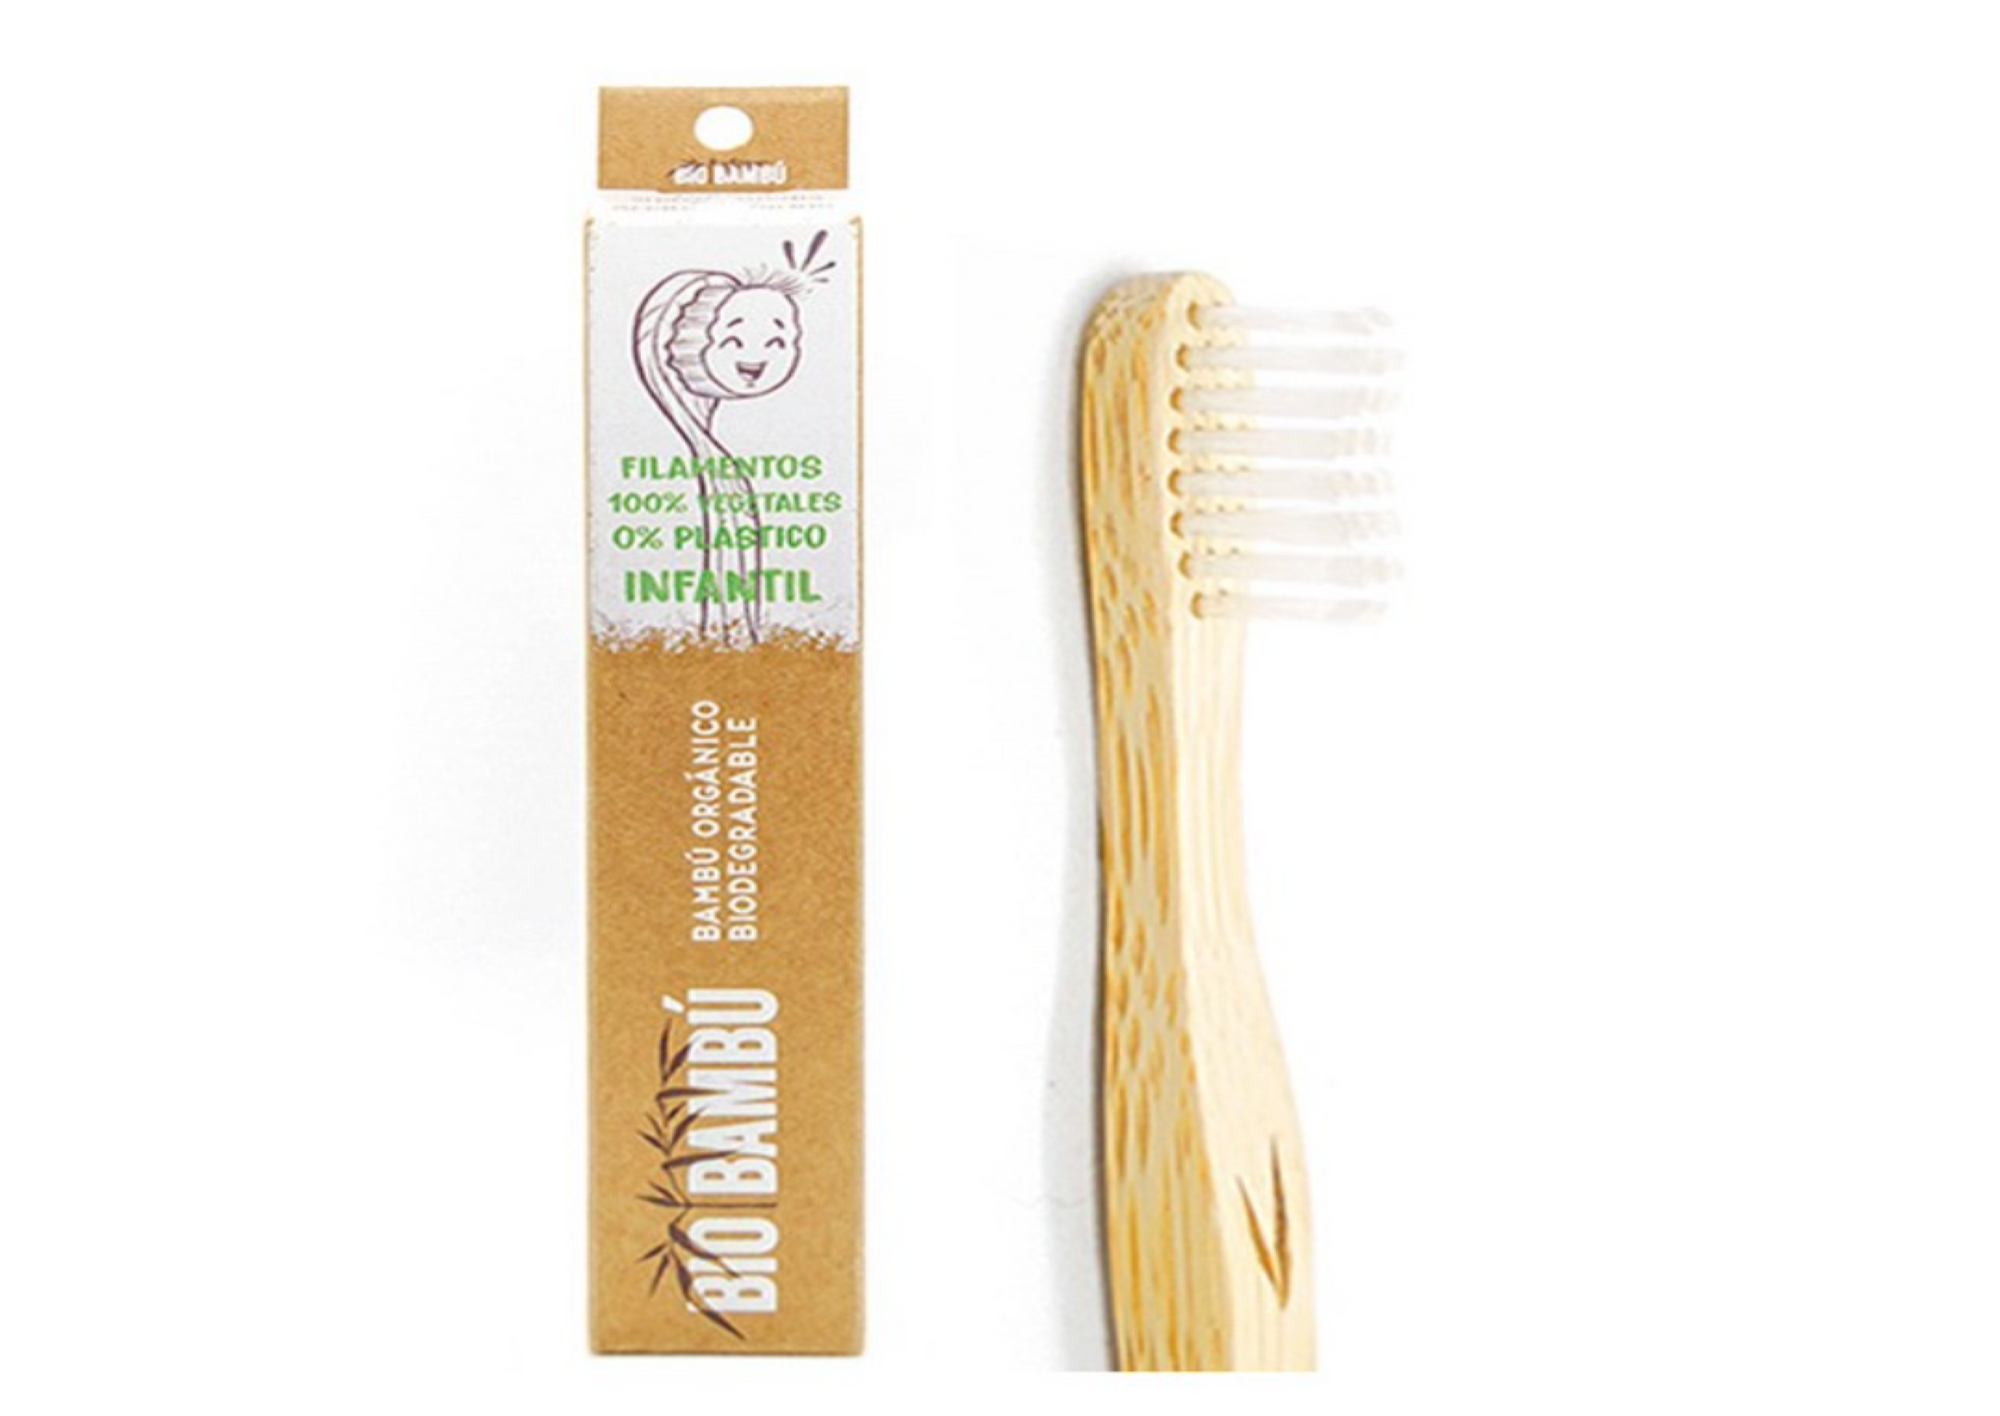 Cepillo dientes infantil bambú